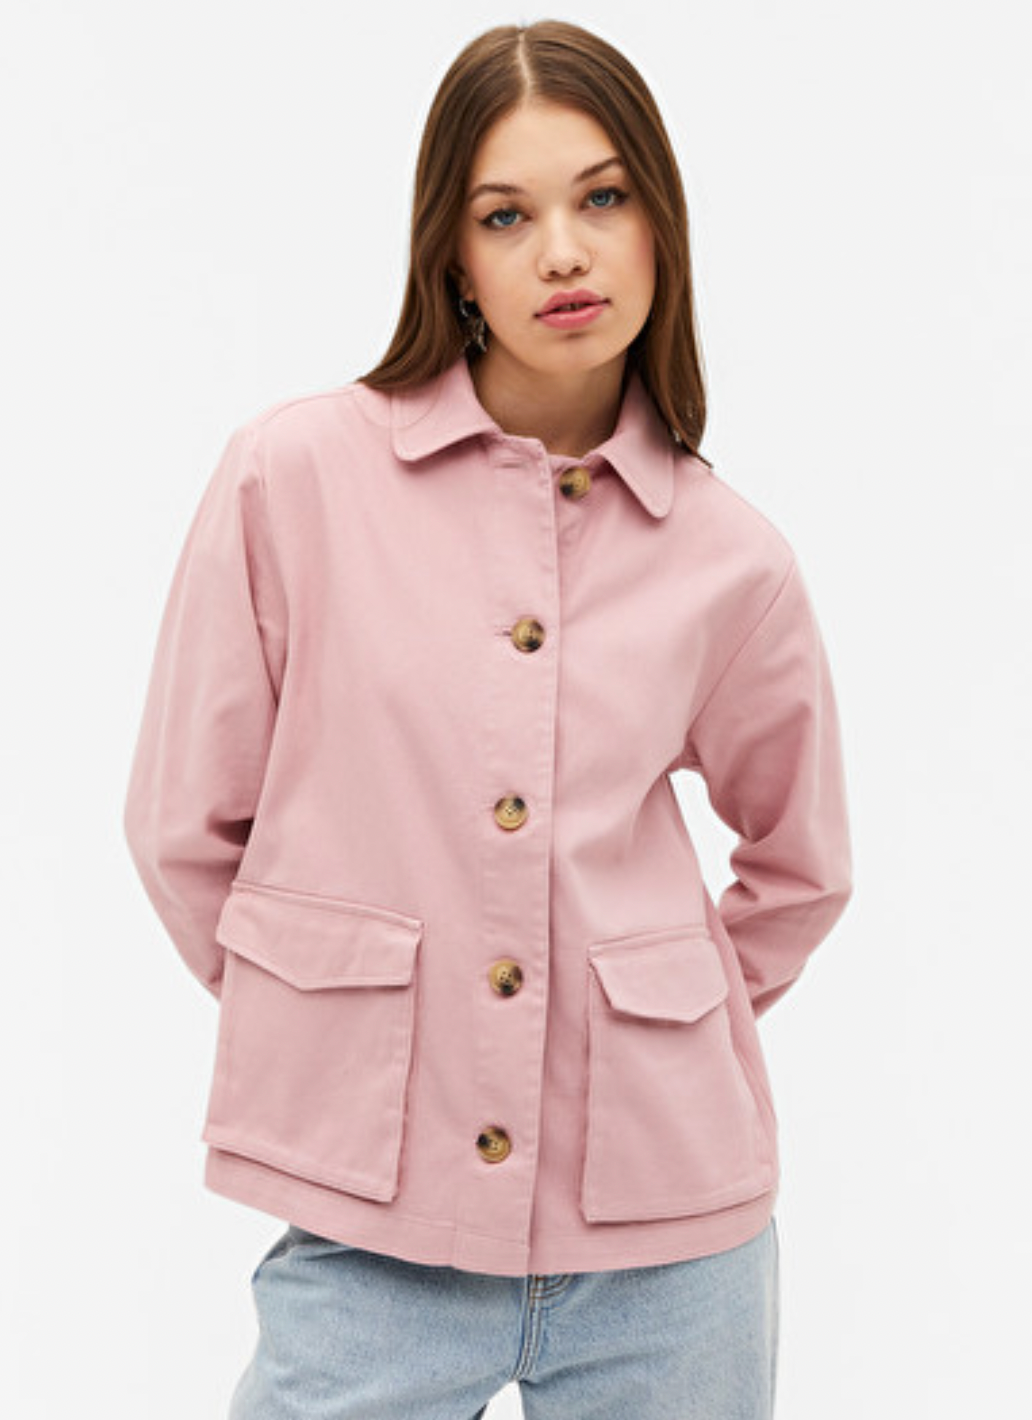 Womens Monki Pink Utility Jacket size small